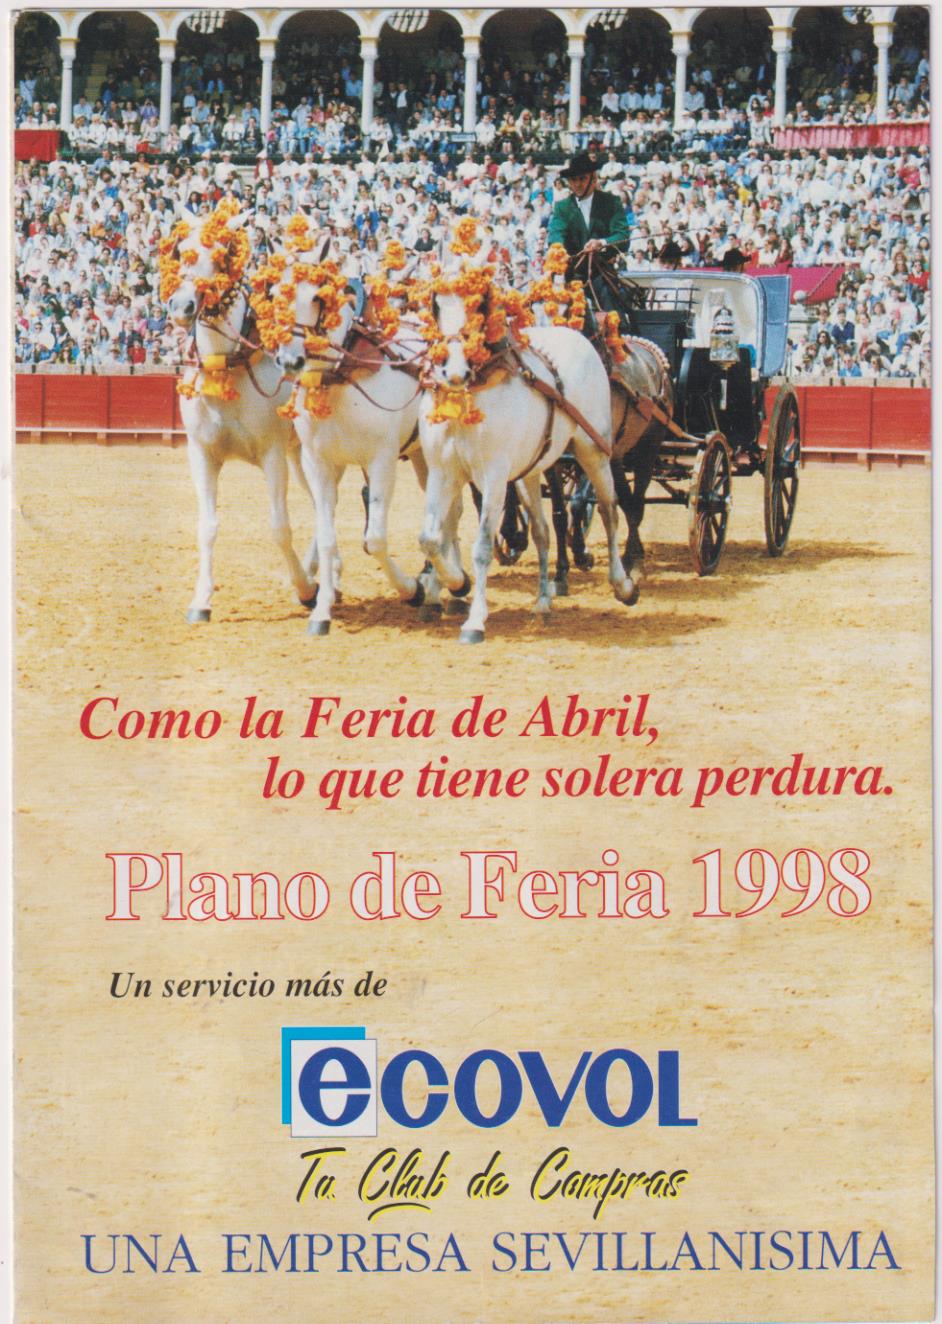 Plano de Feria de 1998. Publicidad de Ecovol. Tríptico